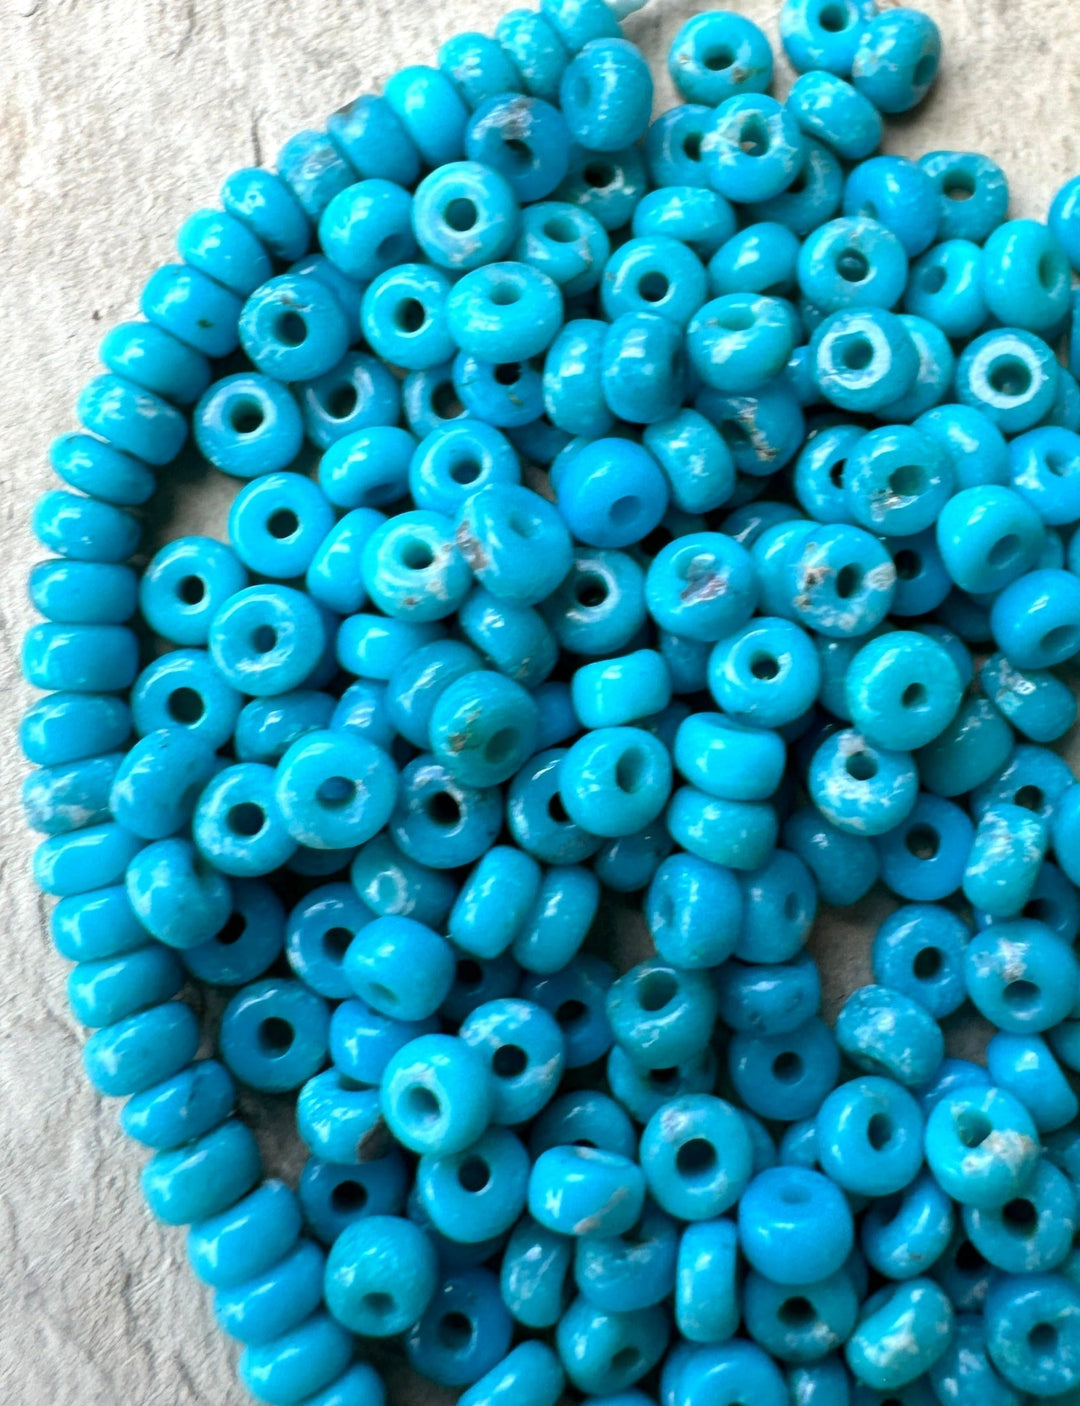 Sleeping Beauty Turquoise (AZ) 2x3mm Rondelle Beads Package